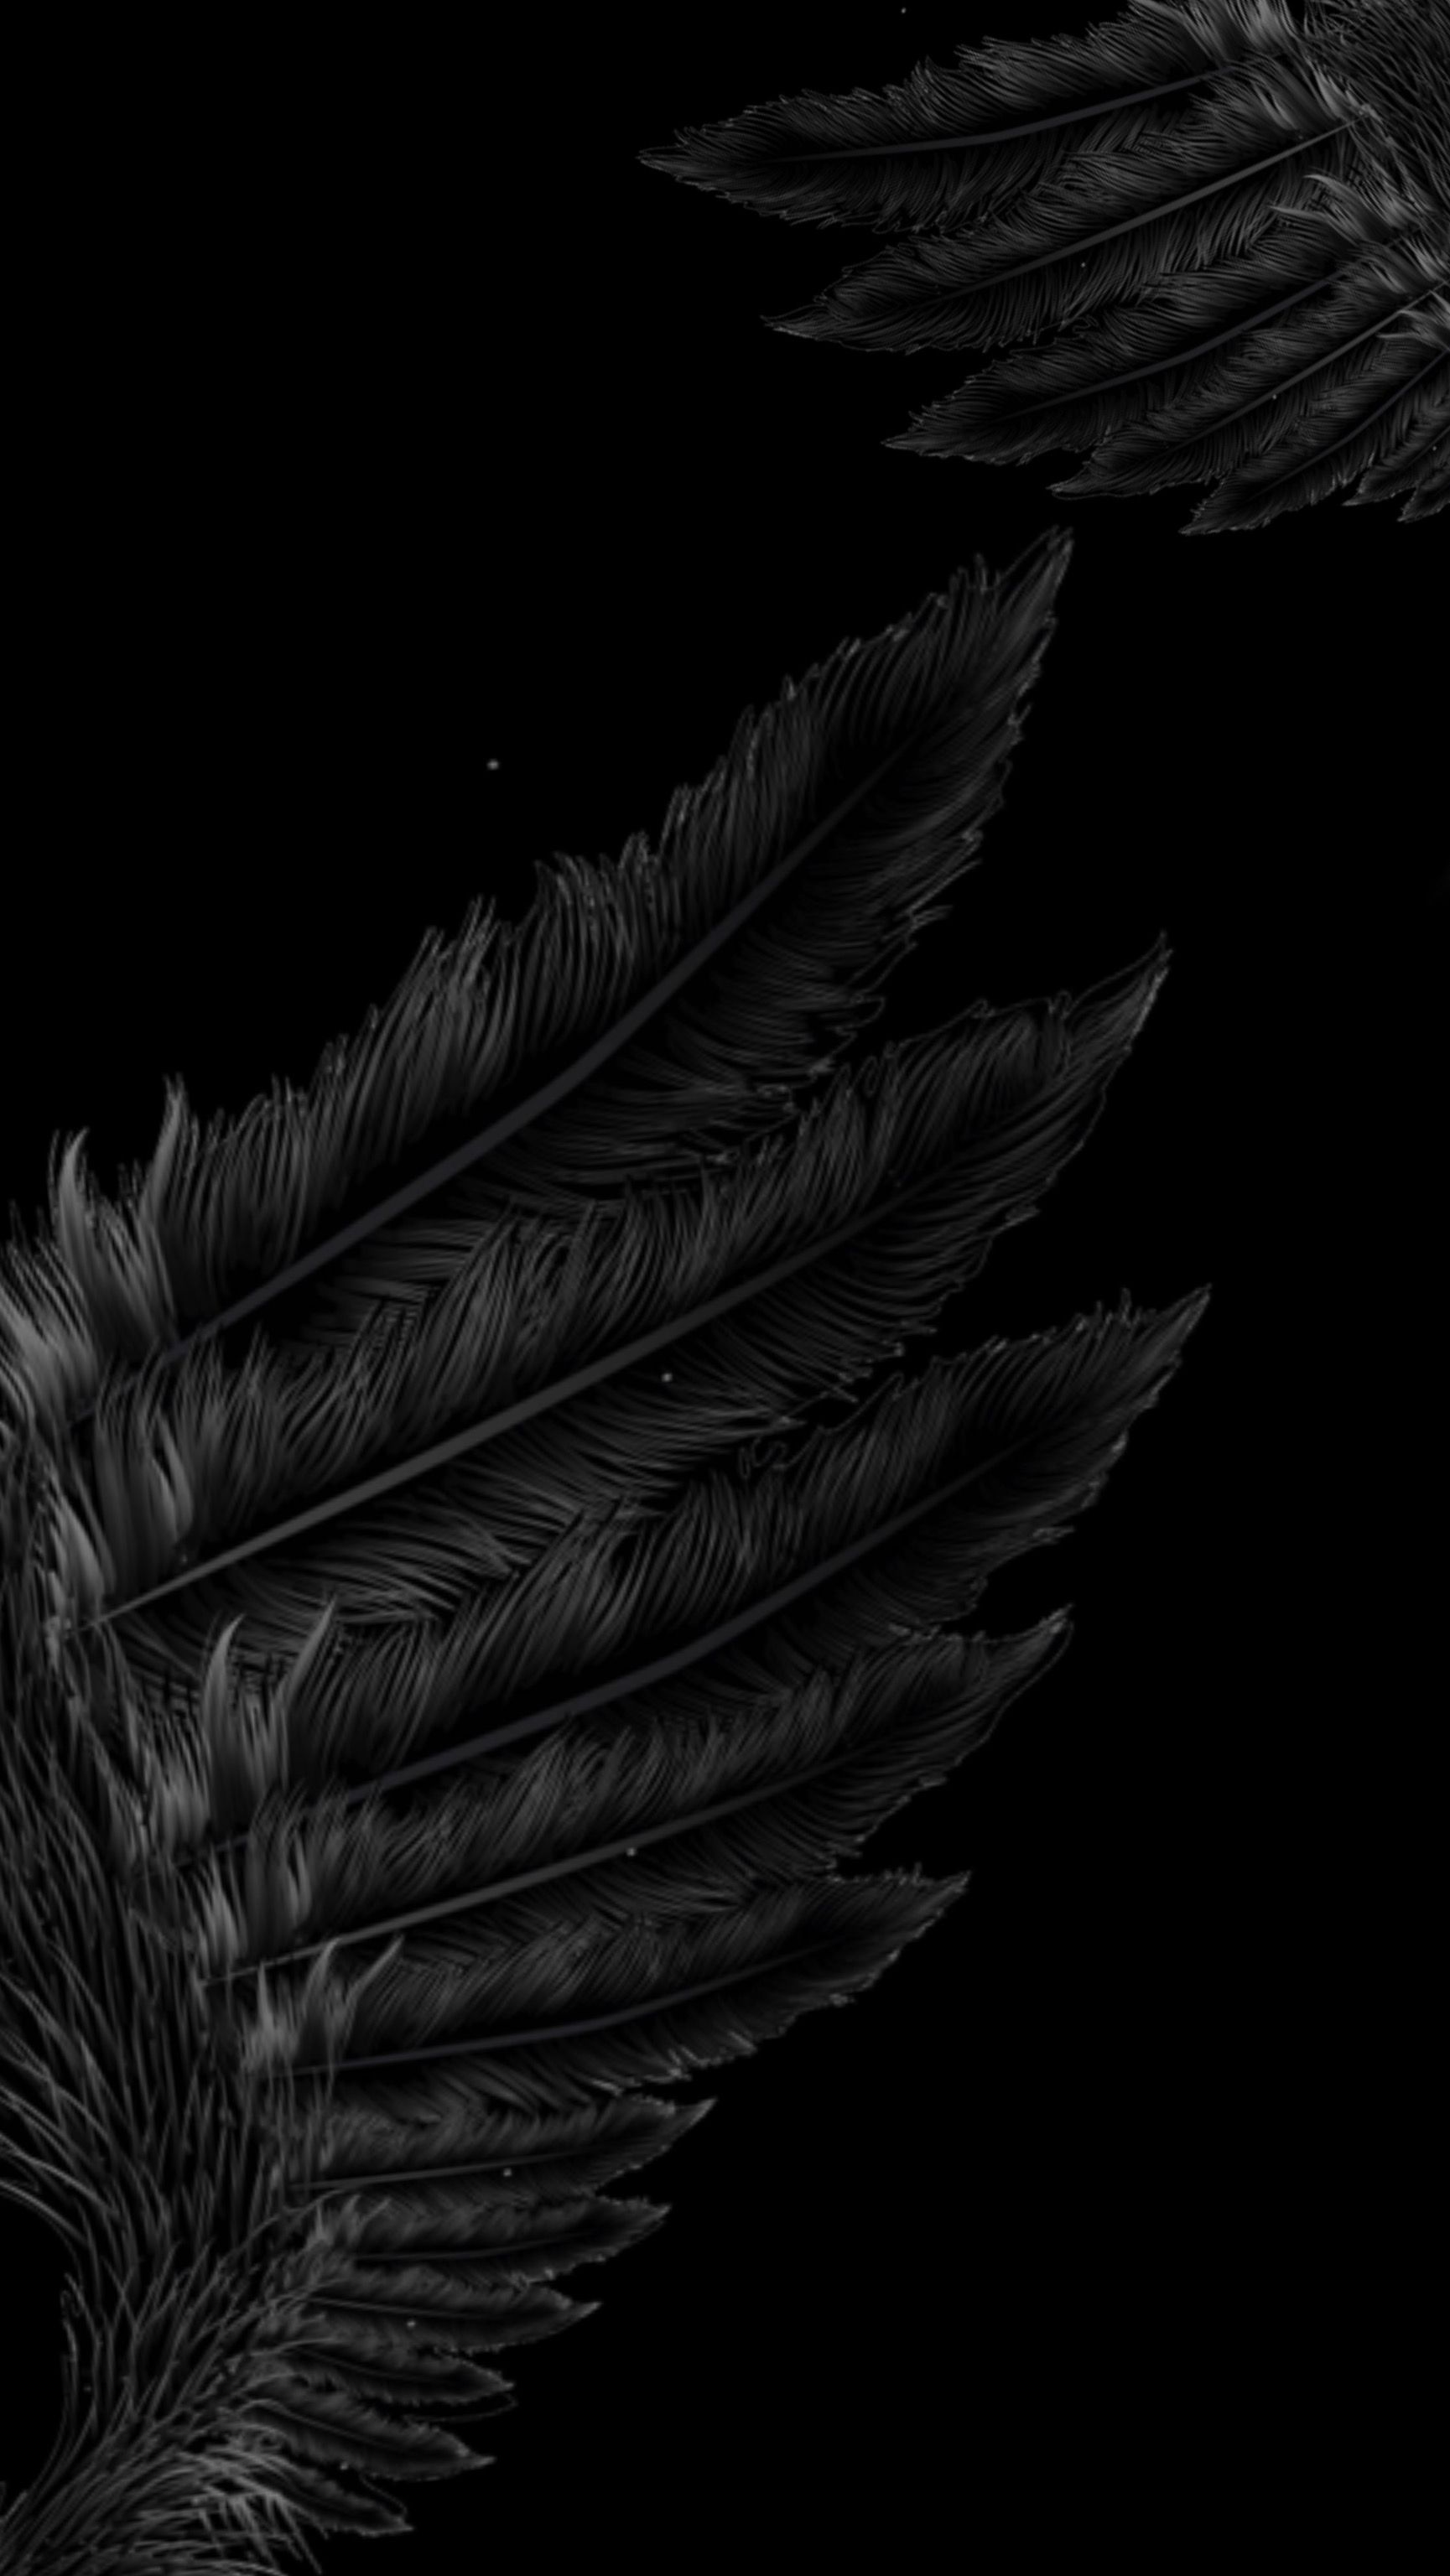 Black wings wallpaper- background. Wings wallpaper, Feather wallpaper iphone, Feather wallpaper